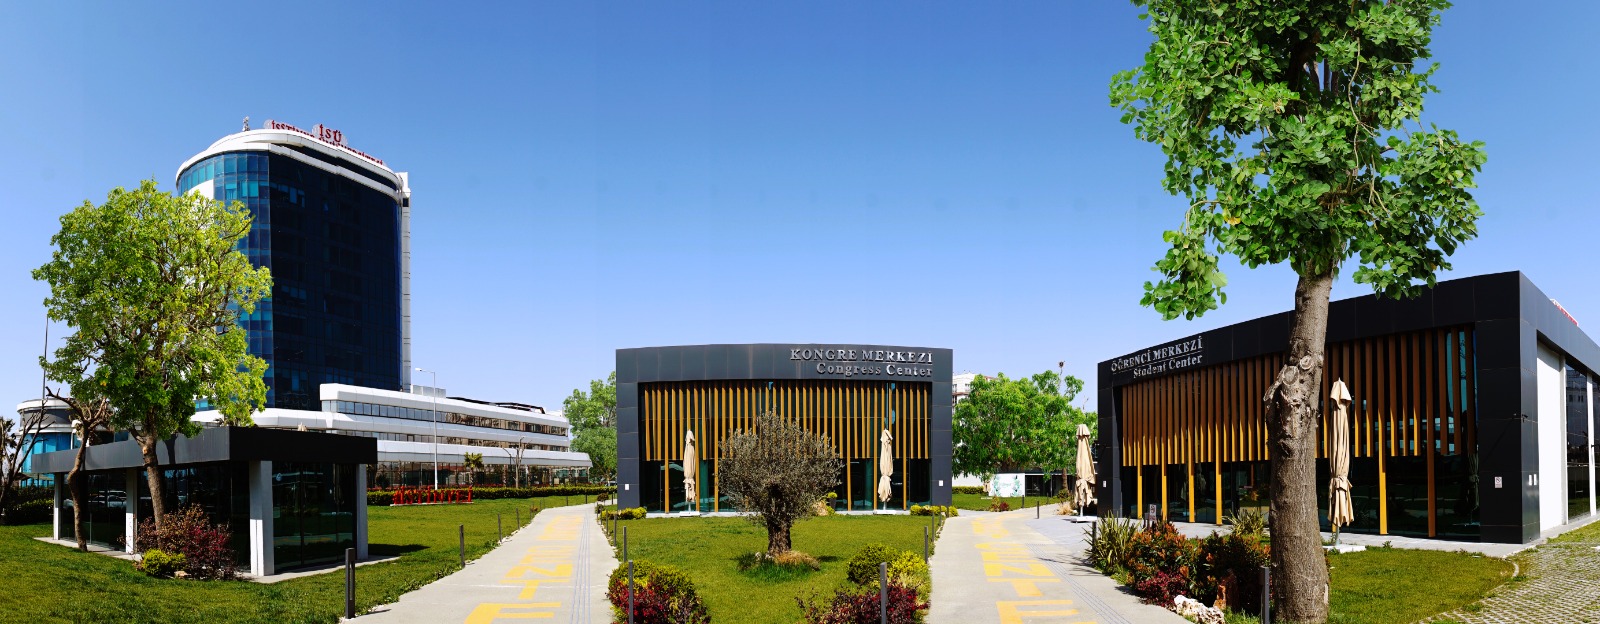 Istinye University main campus